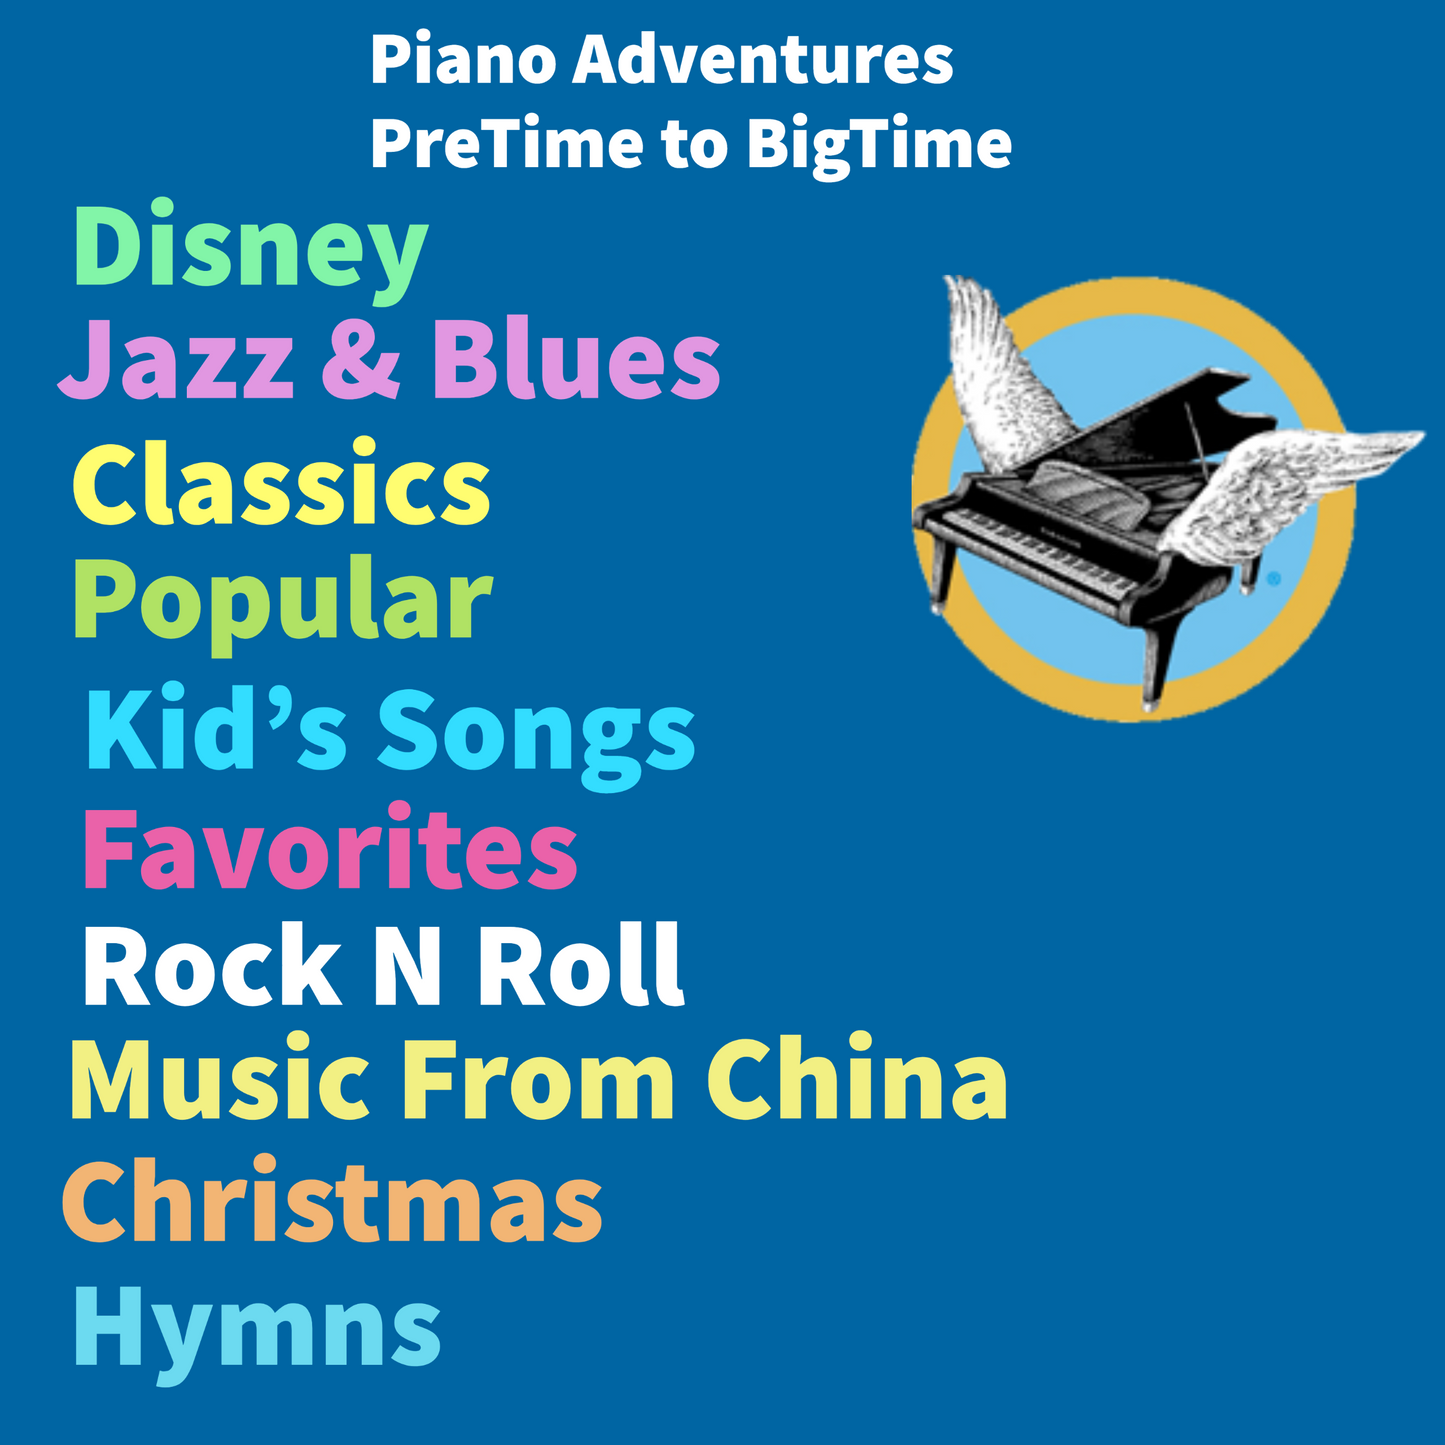 Faber Piano Adventures: ChordTime Piano Jewish Favorites Level 2B Book